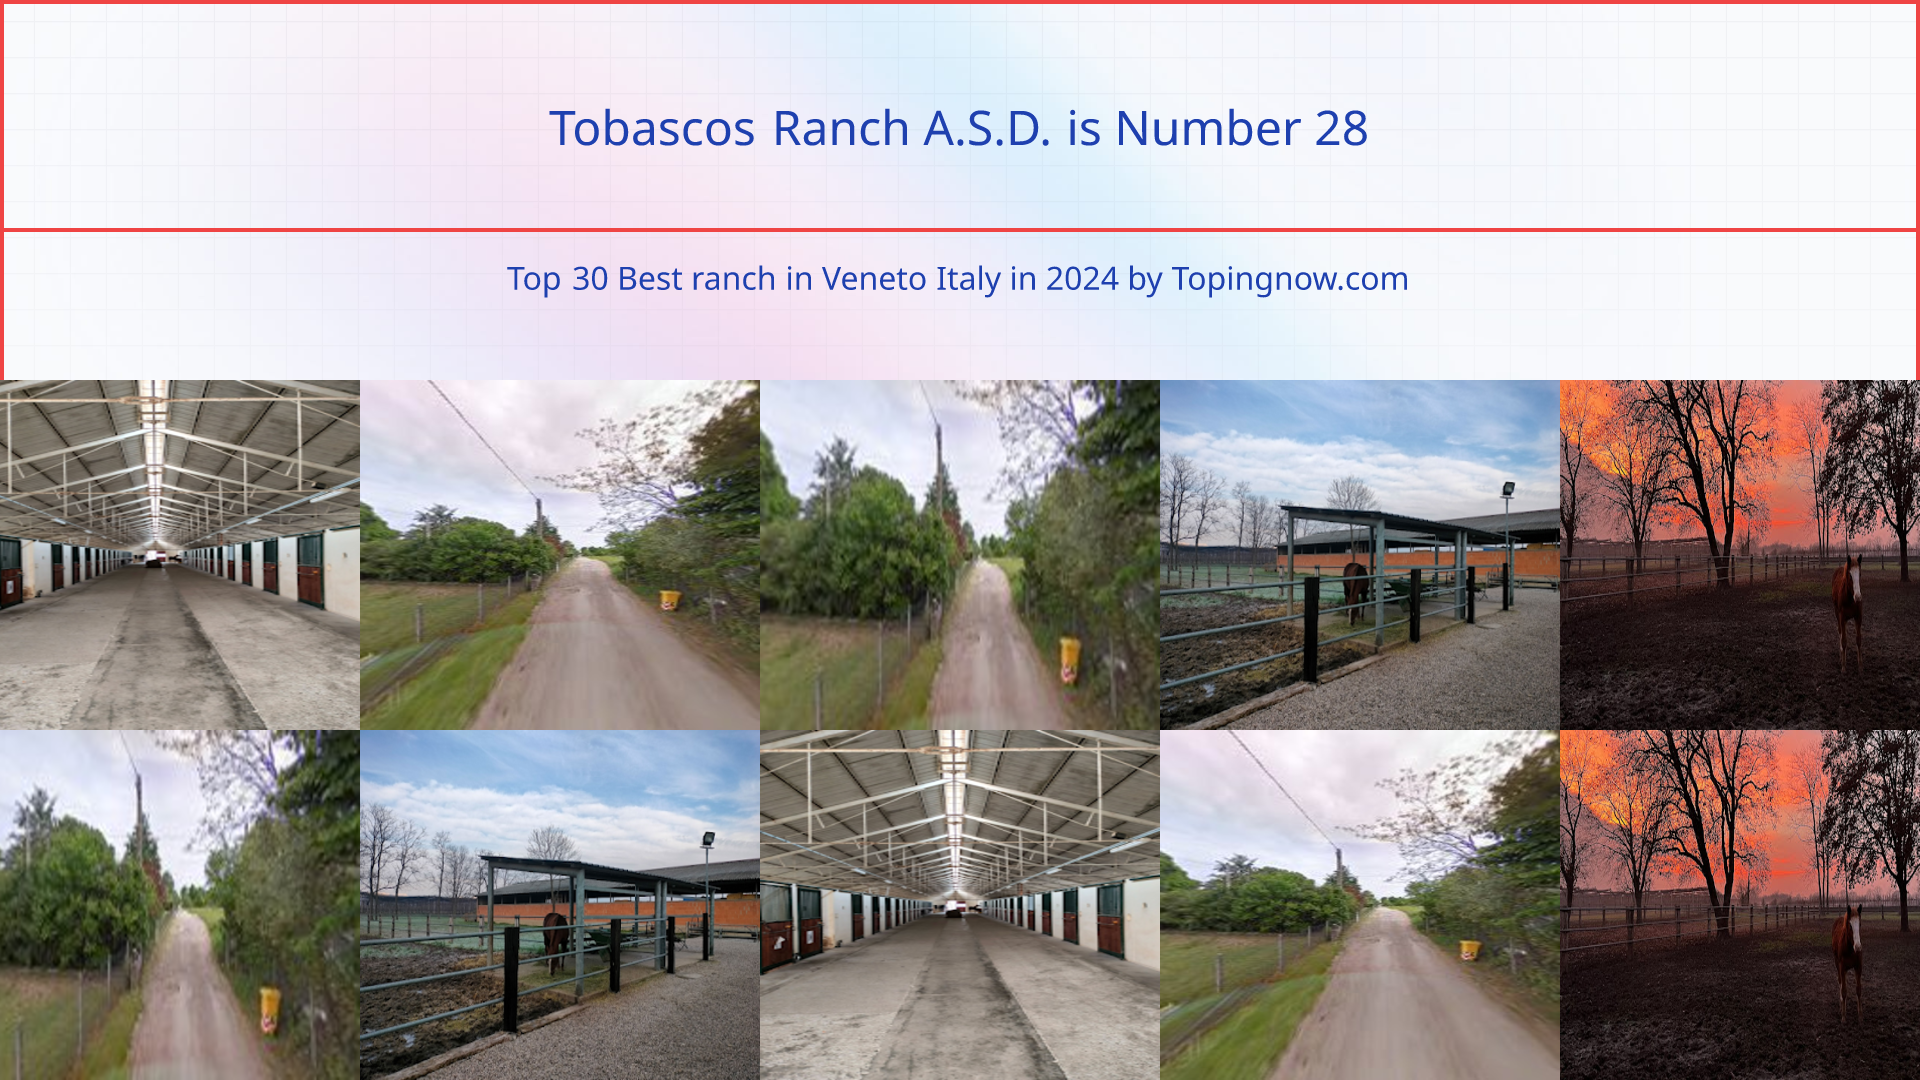 Tobascos Ranch A.S.D.: Top 30 Best ranch in Veneto Italy in 2024